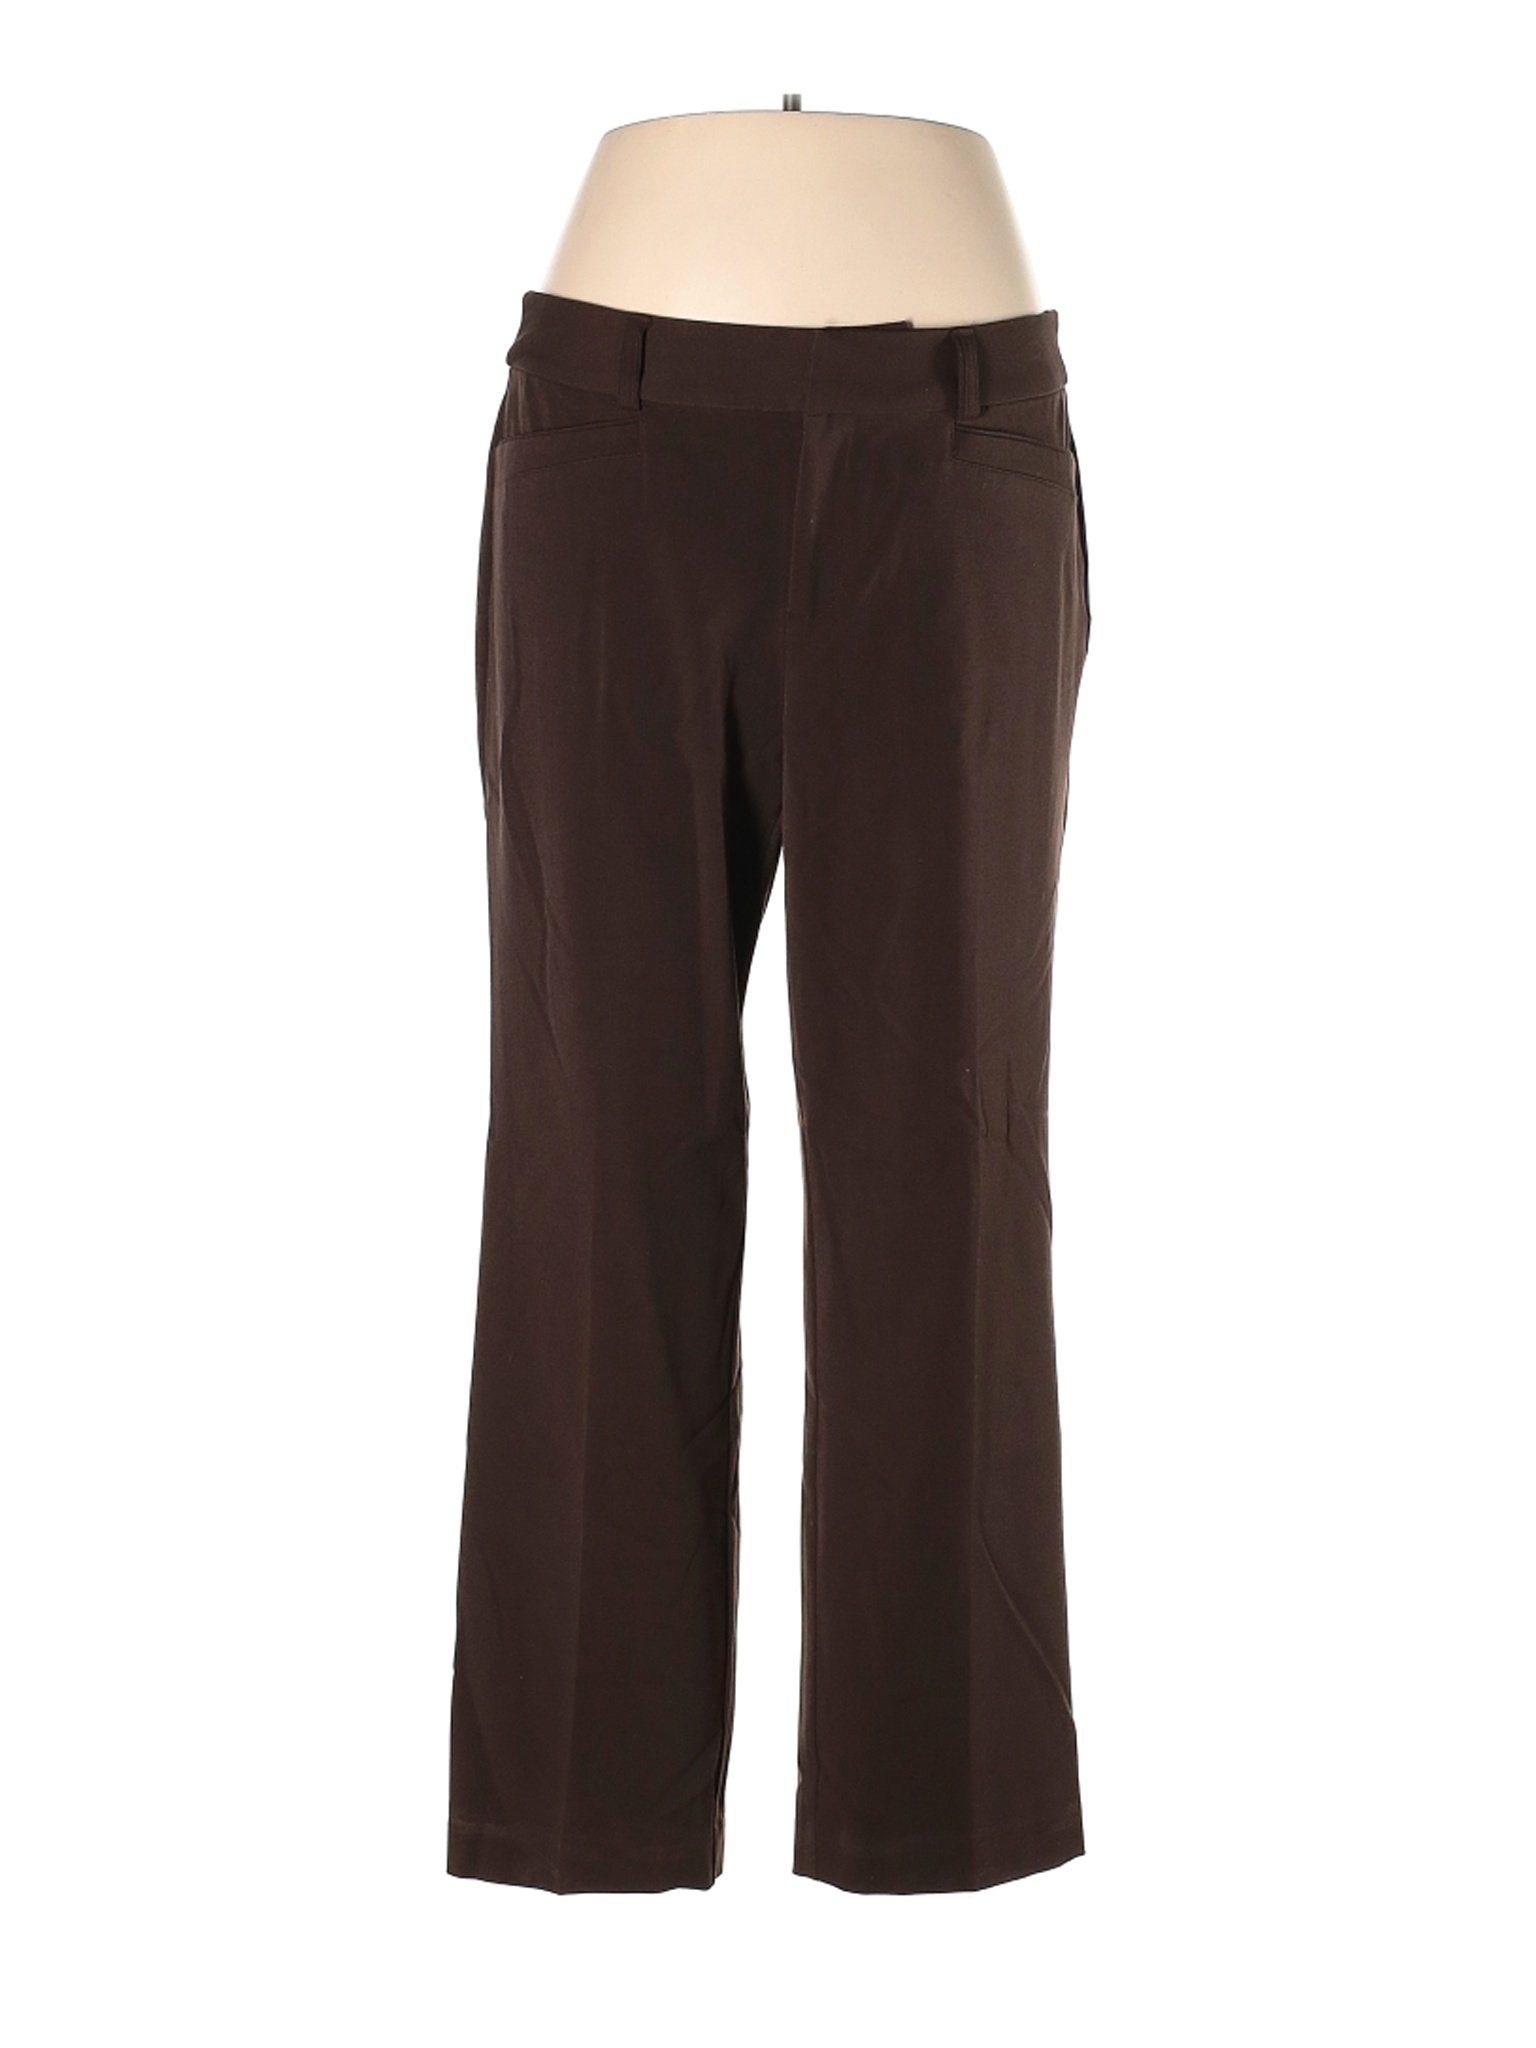 Christopher & Banks Women Brown Dress Pants 16 | eBay